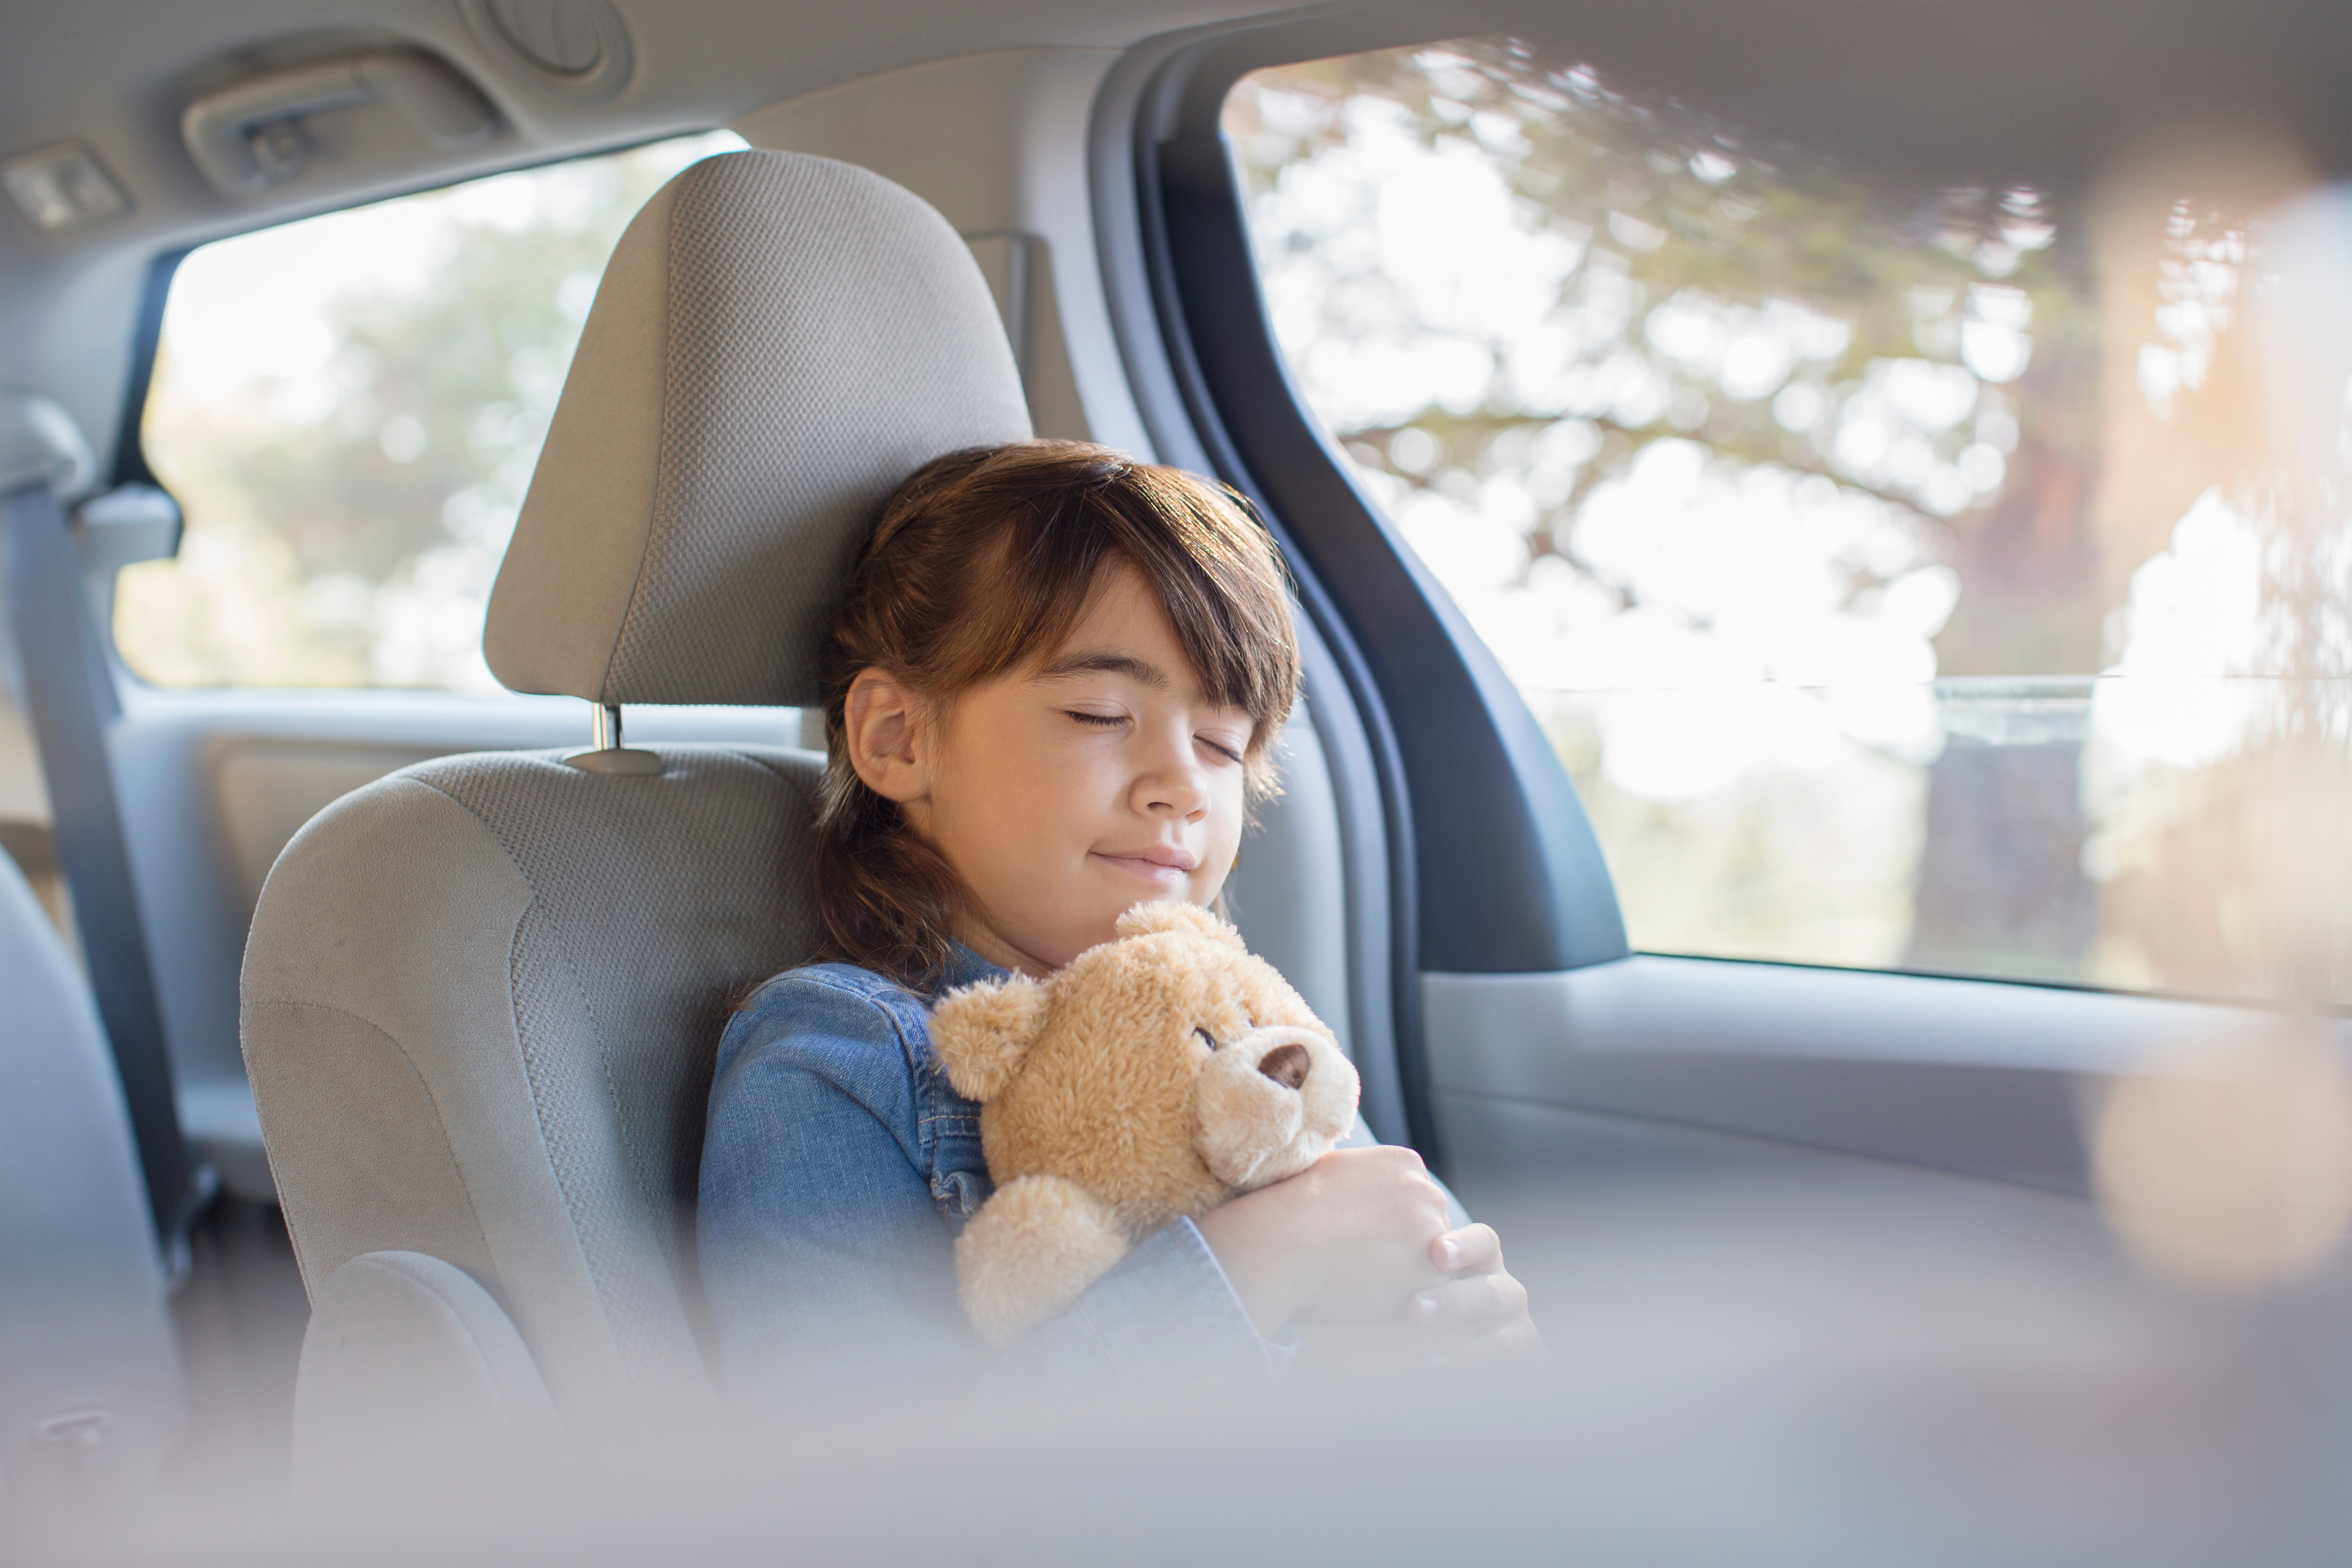 Girl with teddy bear sleeping in back seat of car